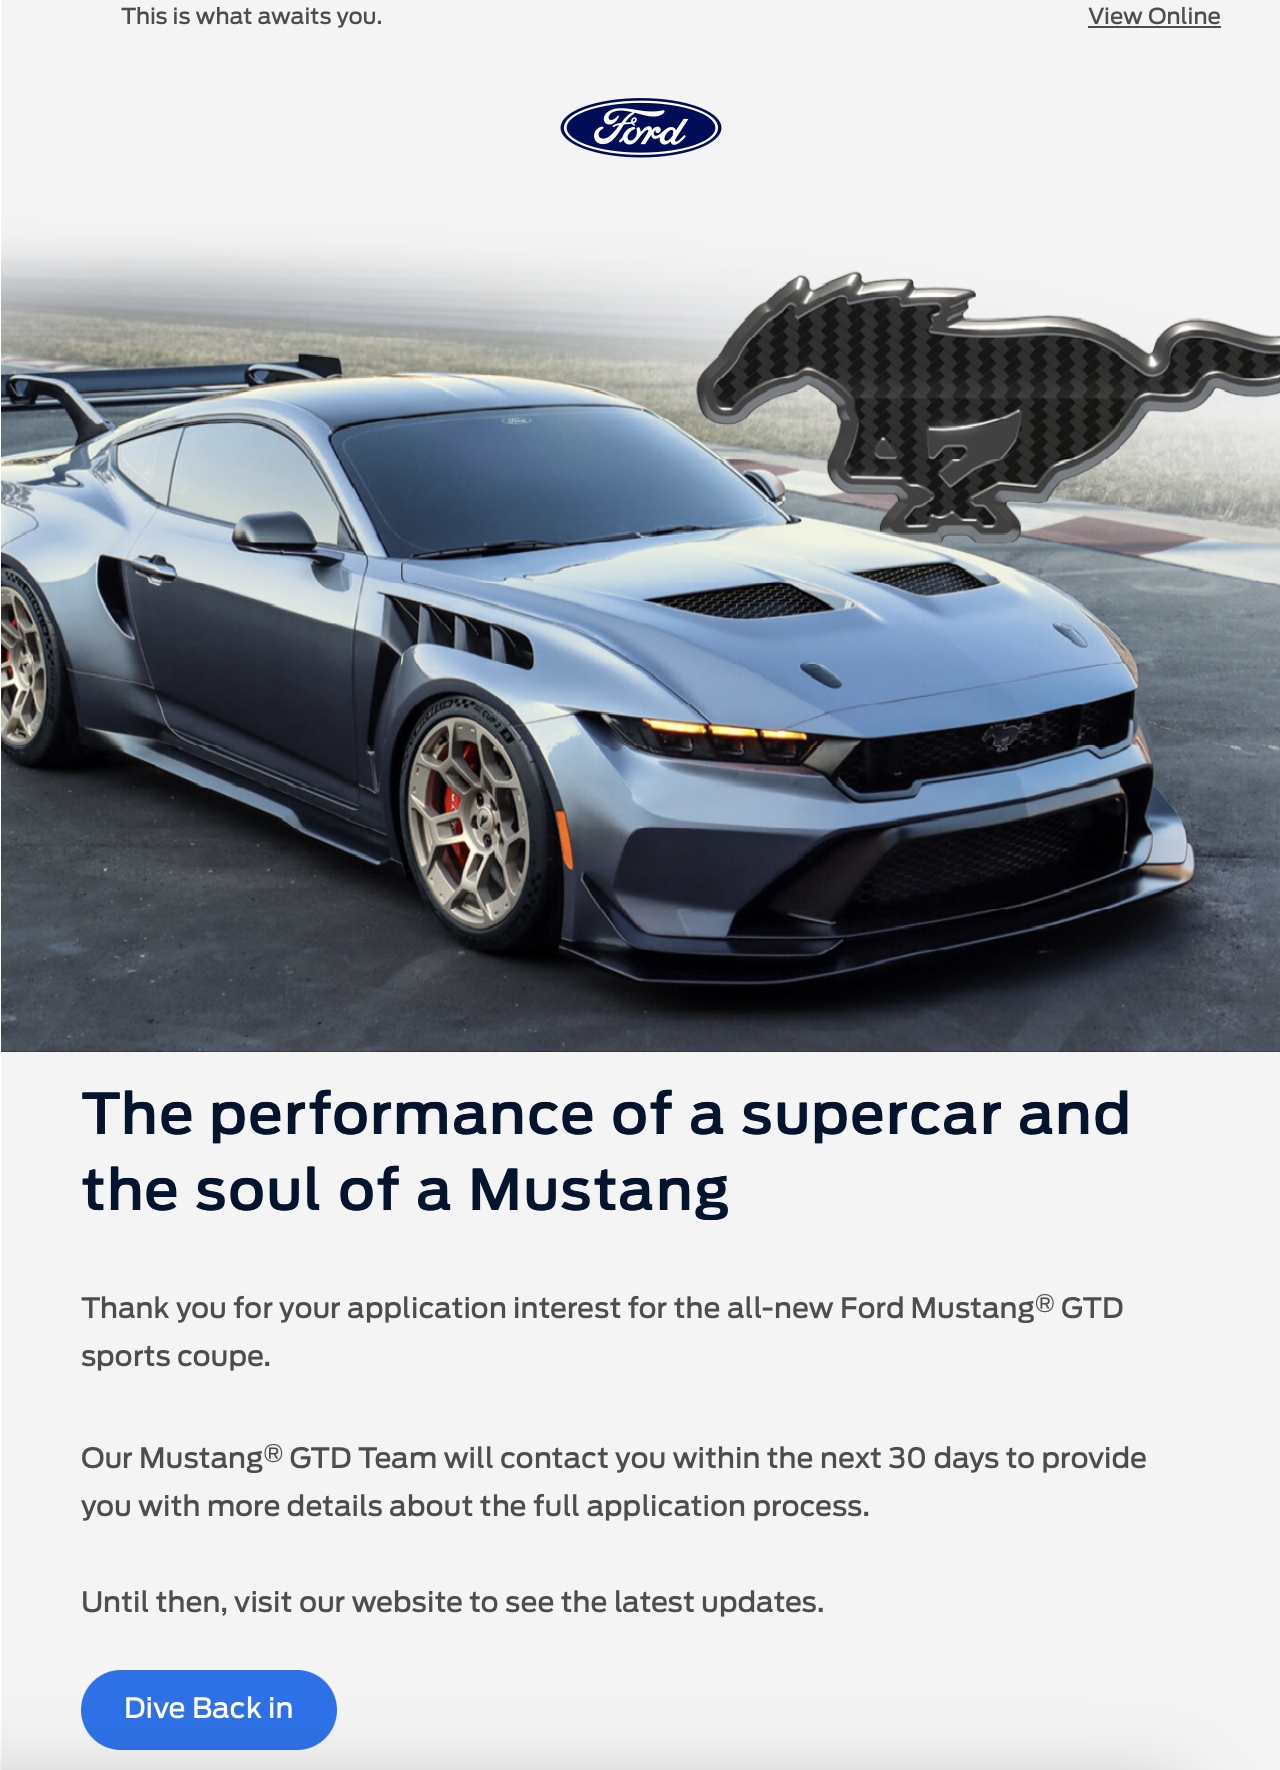 S650 Mustang Official: 2025 Mustang GTD Revealed! 800+ HP 5.2L V8, Pushrod Suspension, $300K MSRP Screenshot 2023-08-22 at 10.46.50 AM